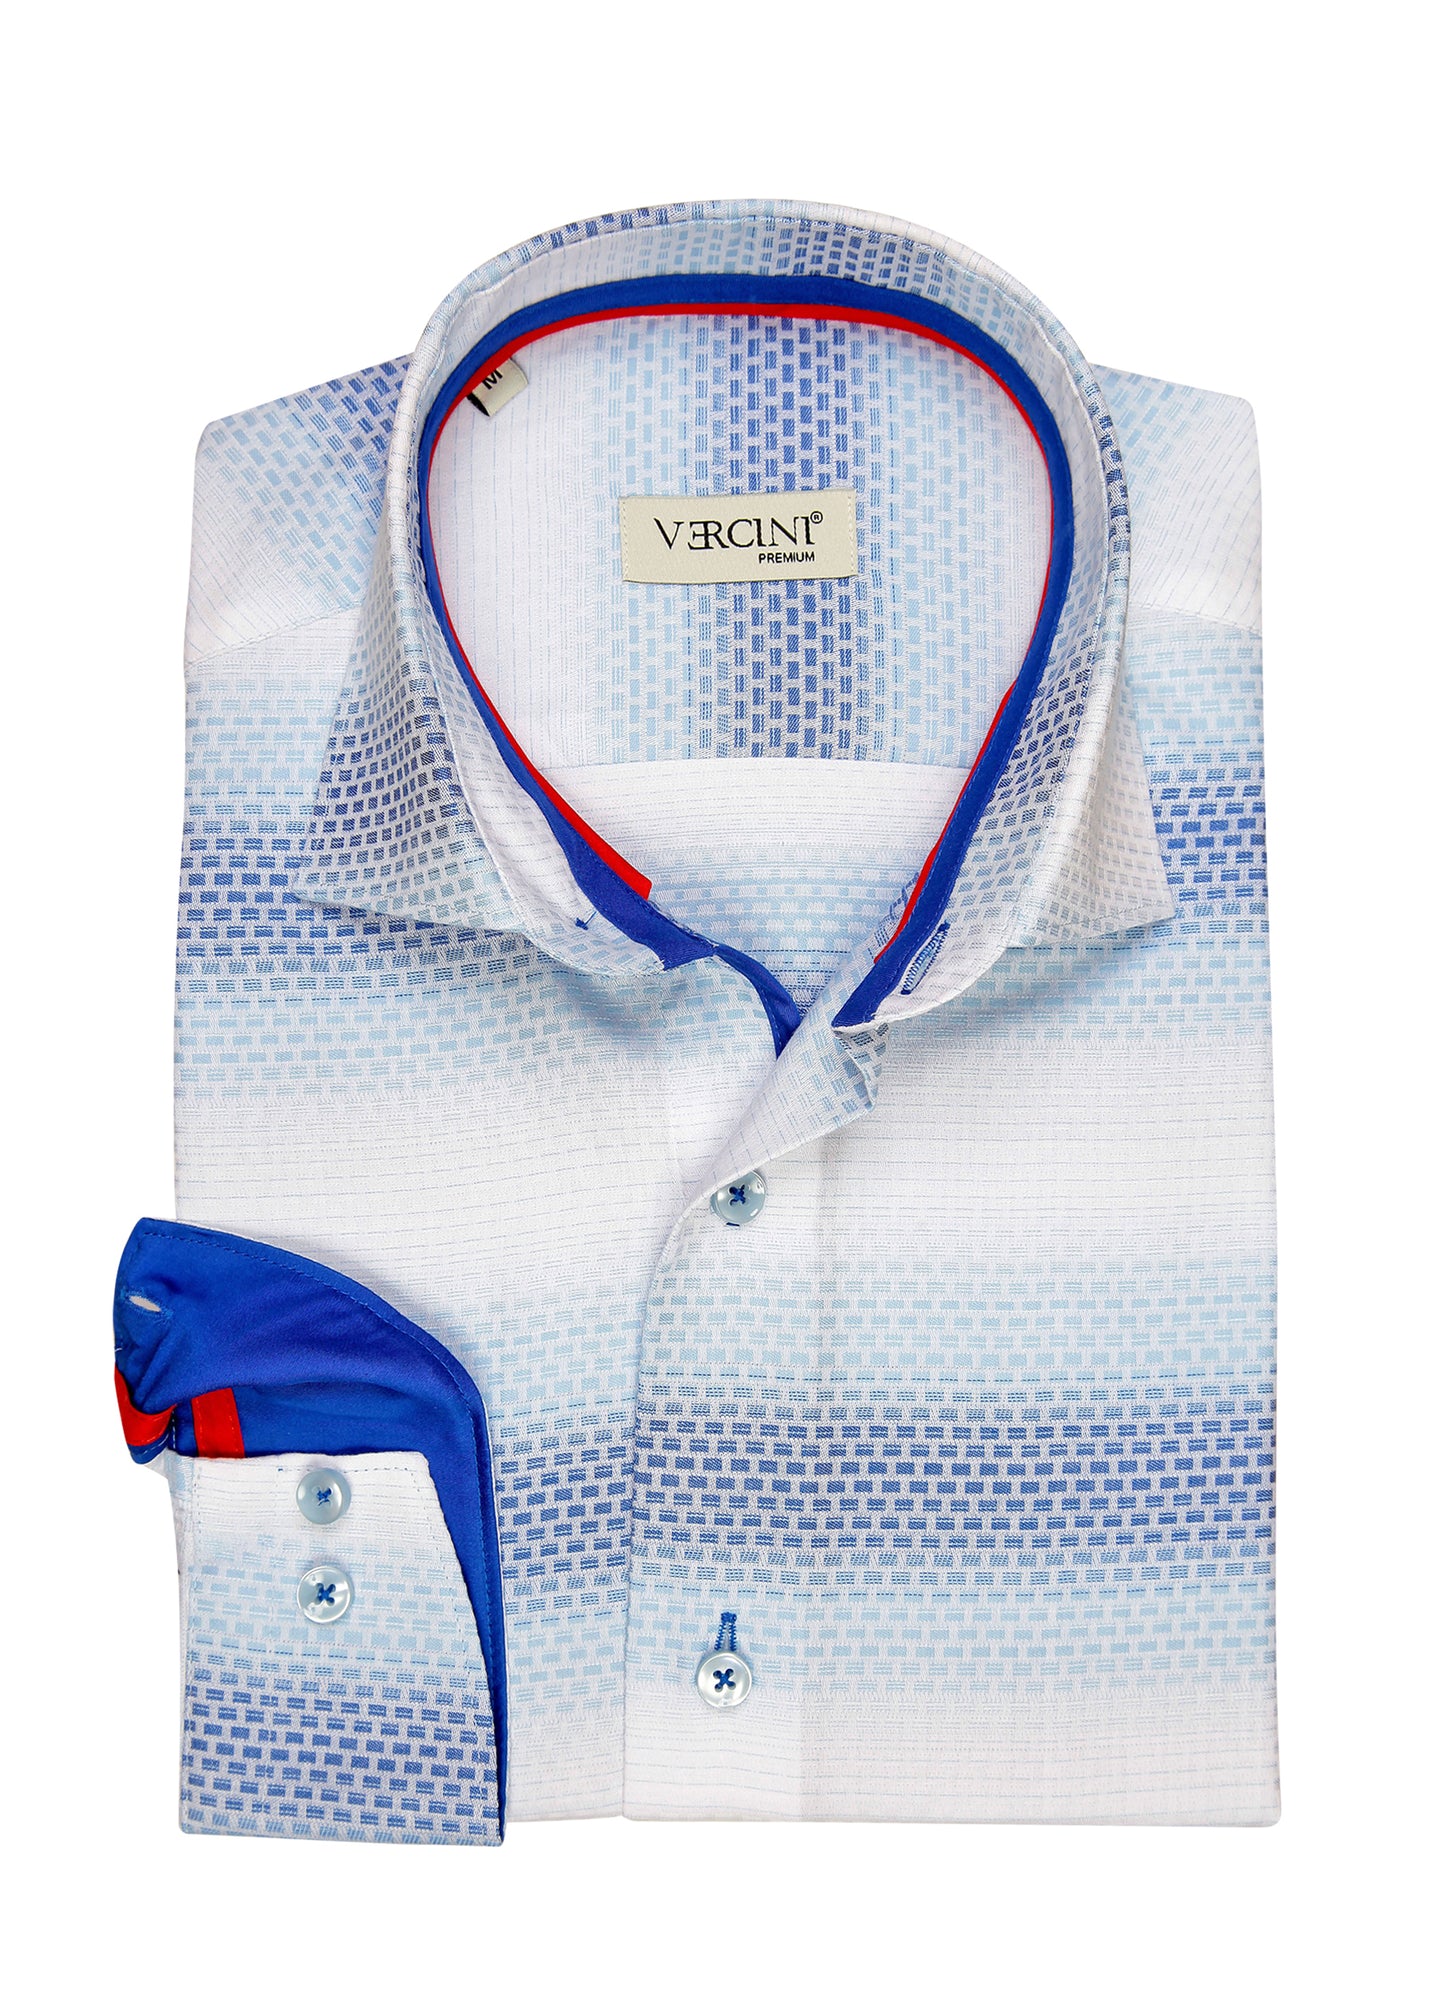 Red Confidence Men's Dress Shirt CASUAL SHIRT On Sale 30% Off Vercini